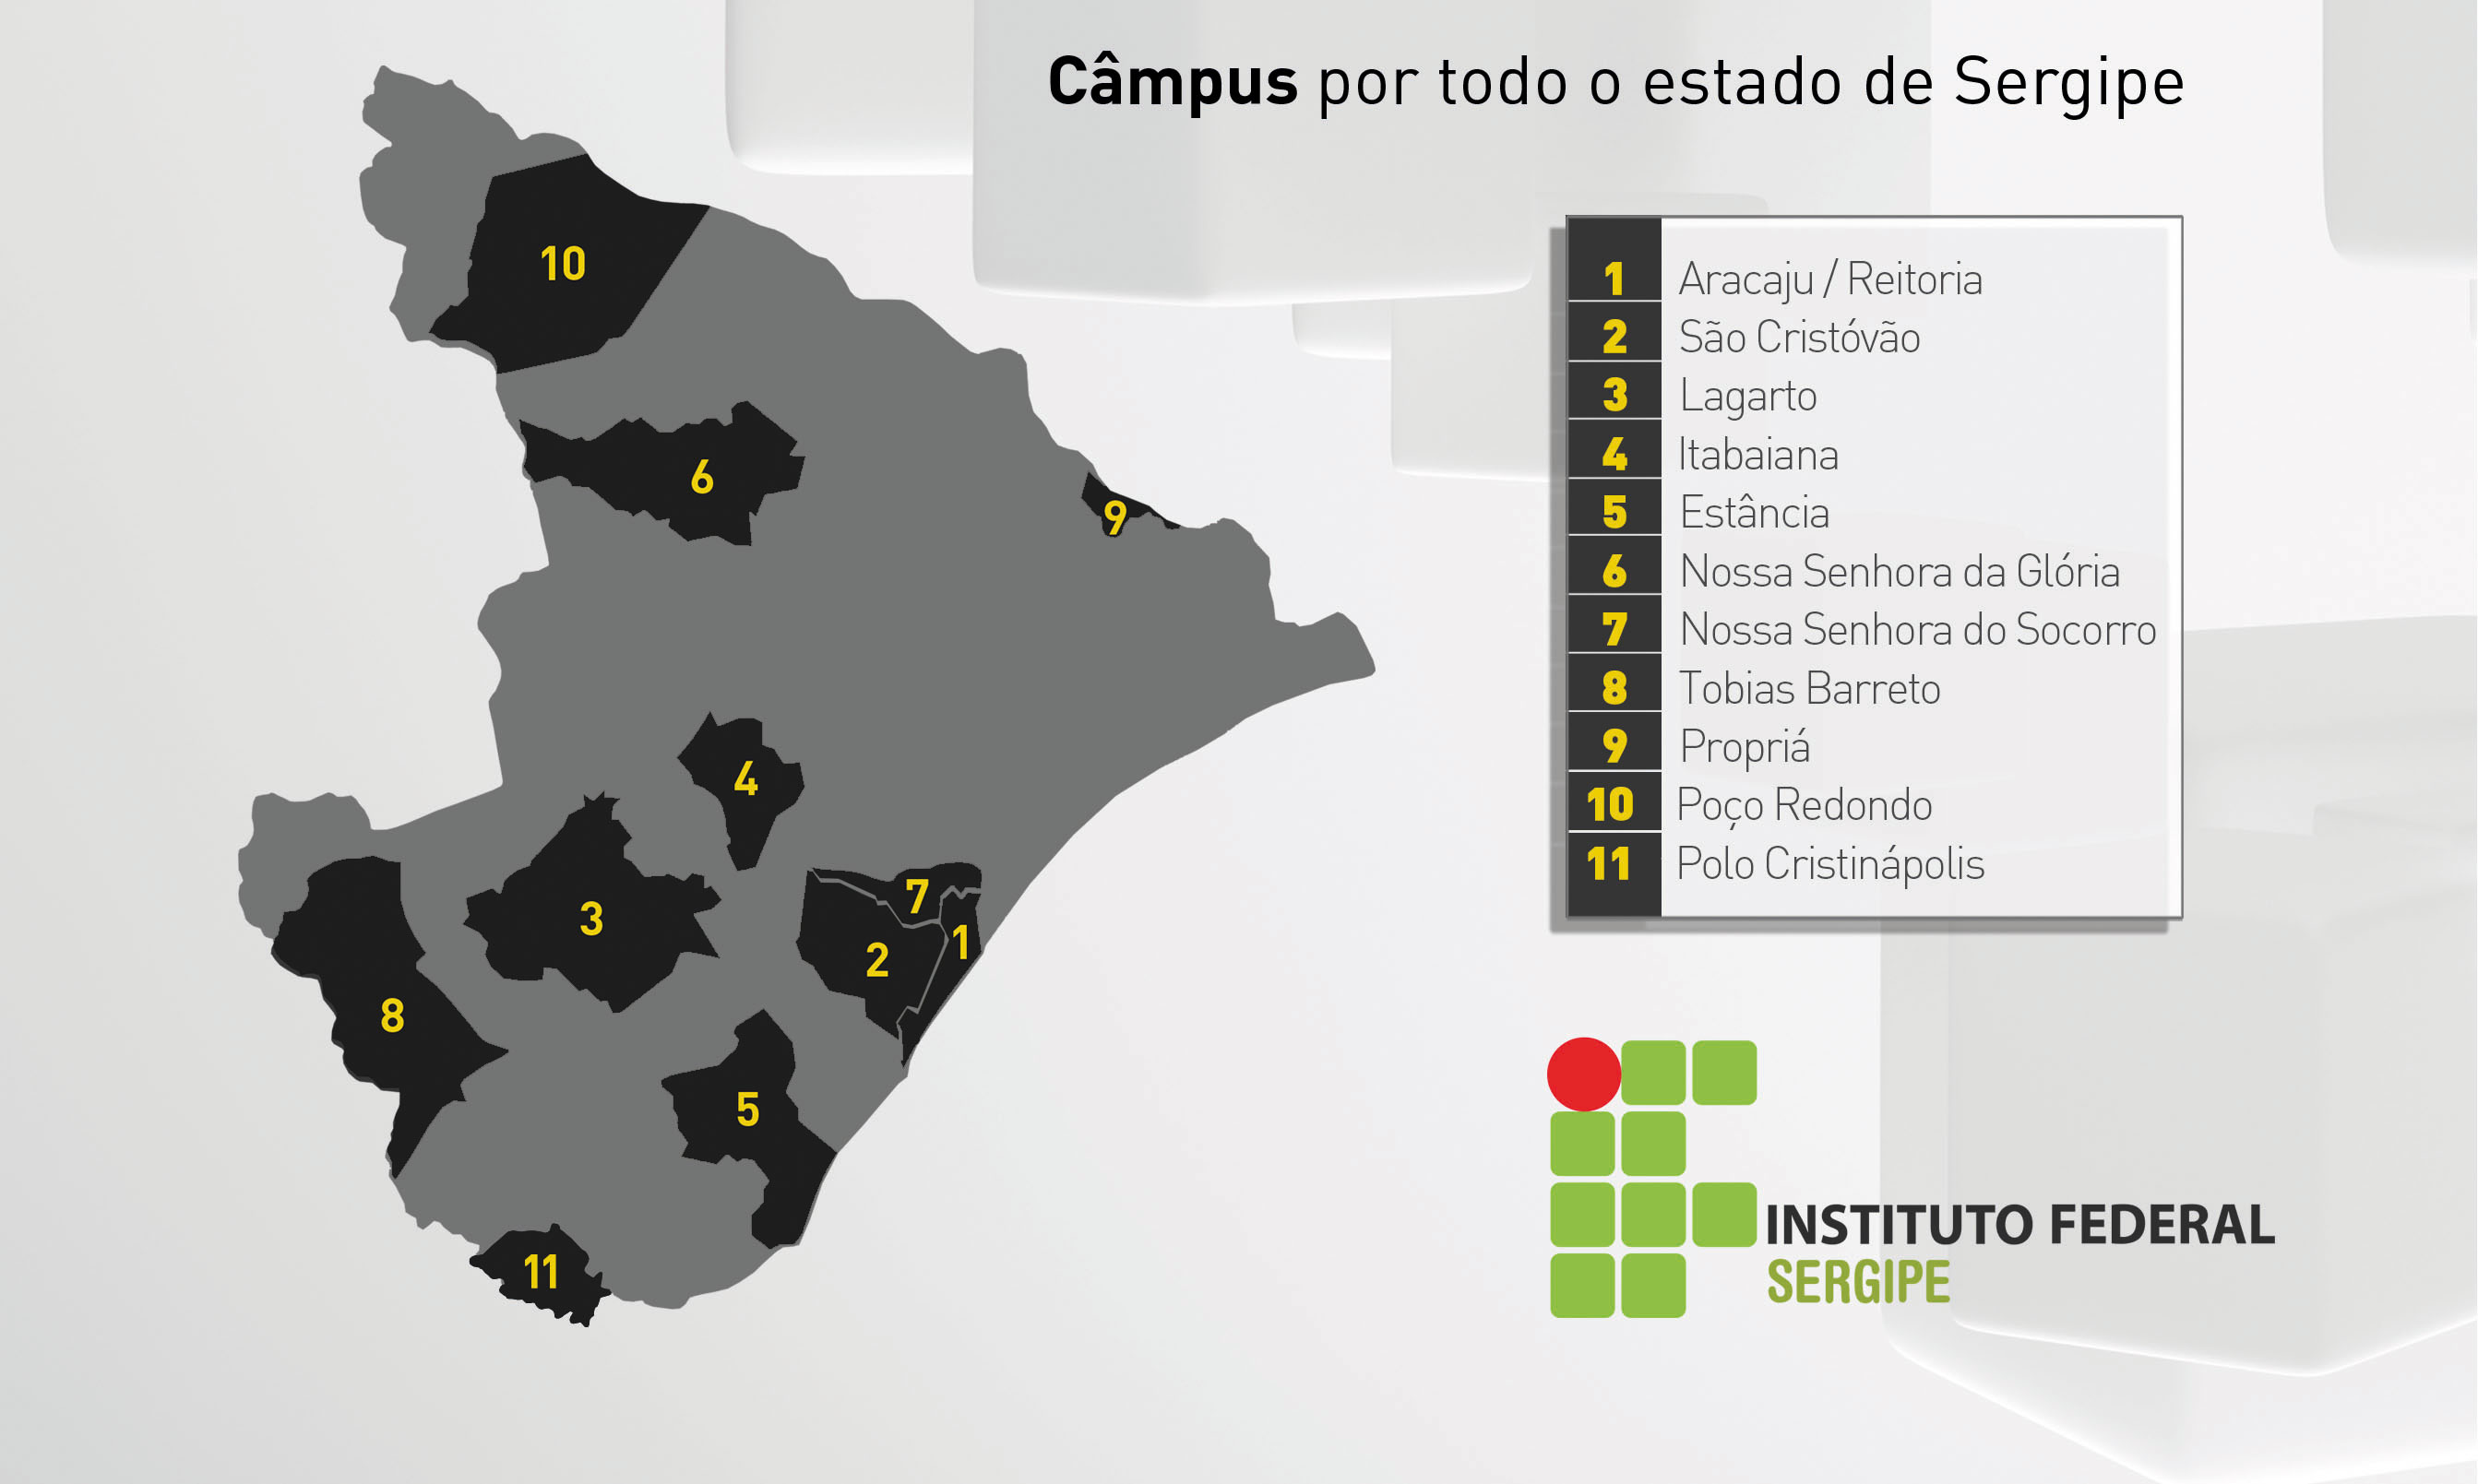 Campus distribuídos pelo estado de Sergipe